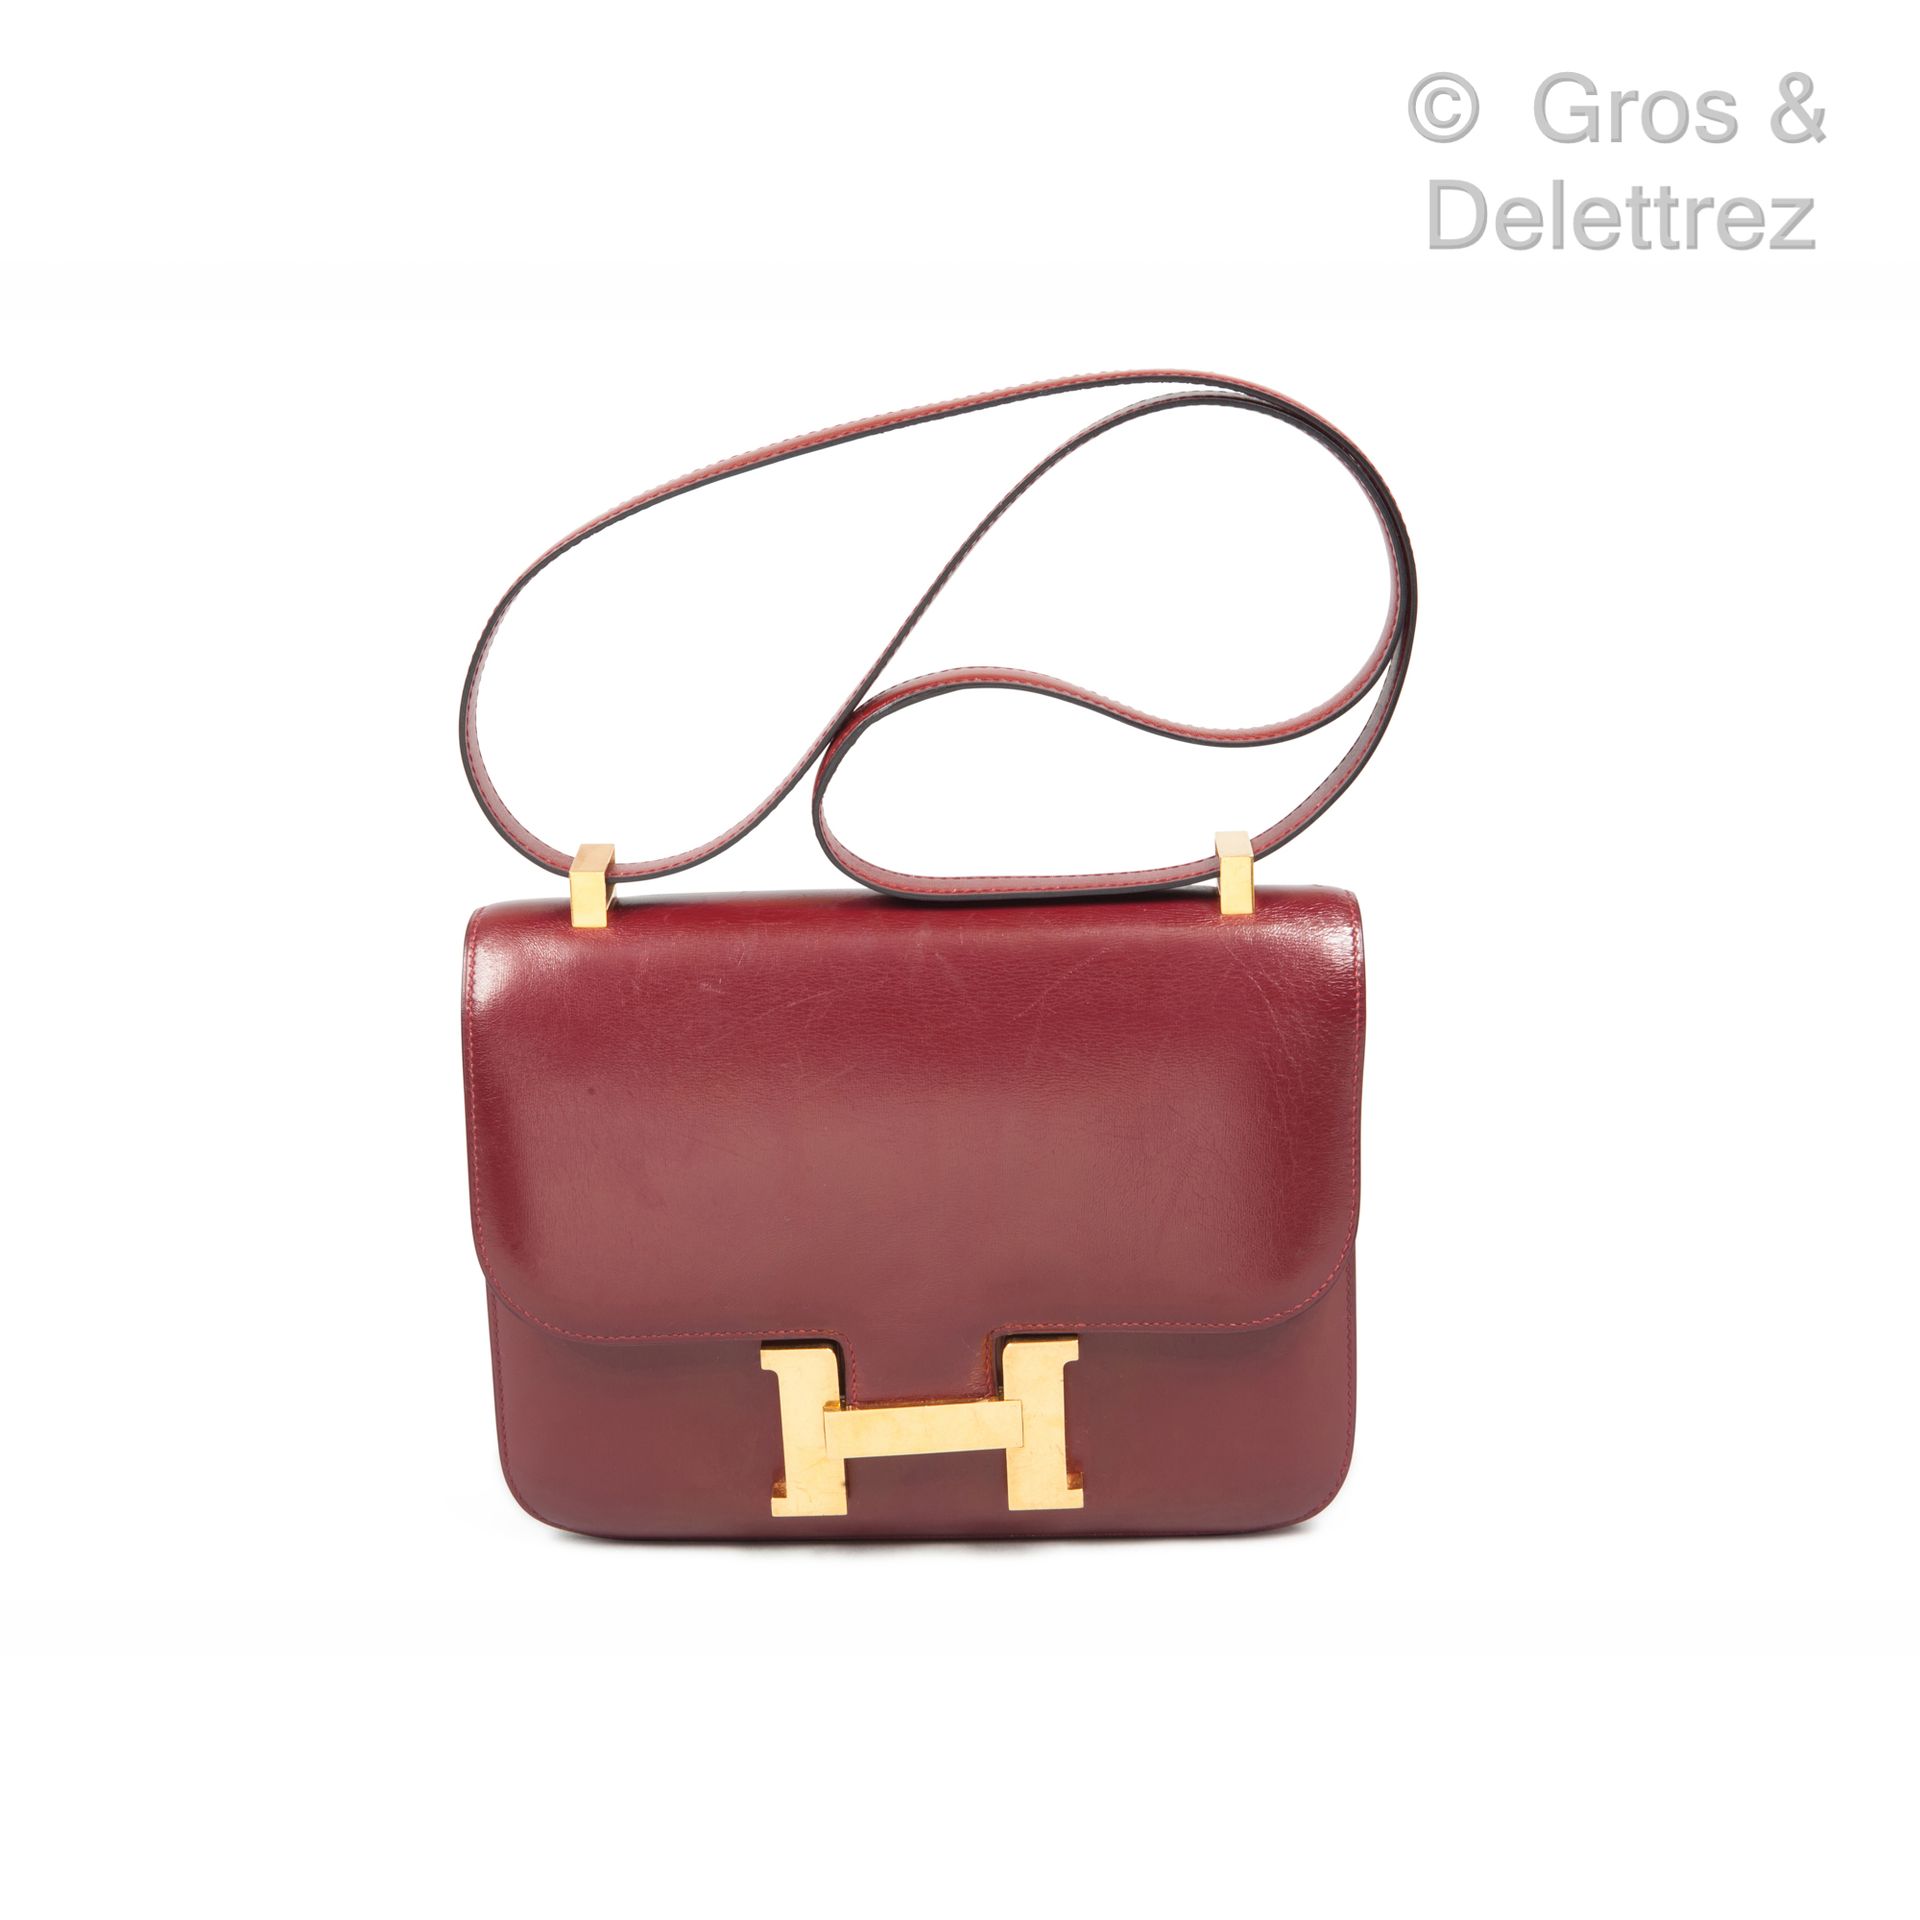 HERMÈS Paris made in France Constance" bag in burgundy box, gilded metal "H" cla&hellip;